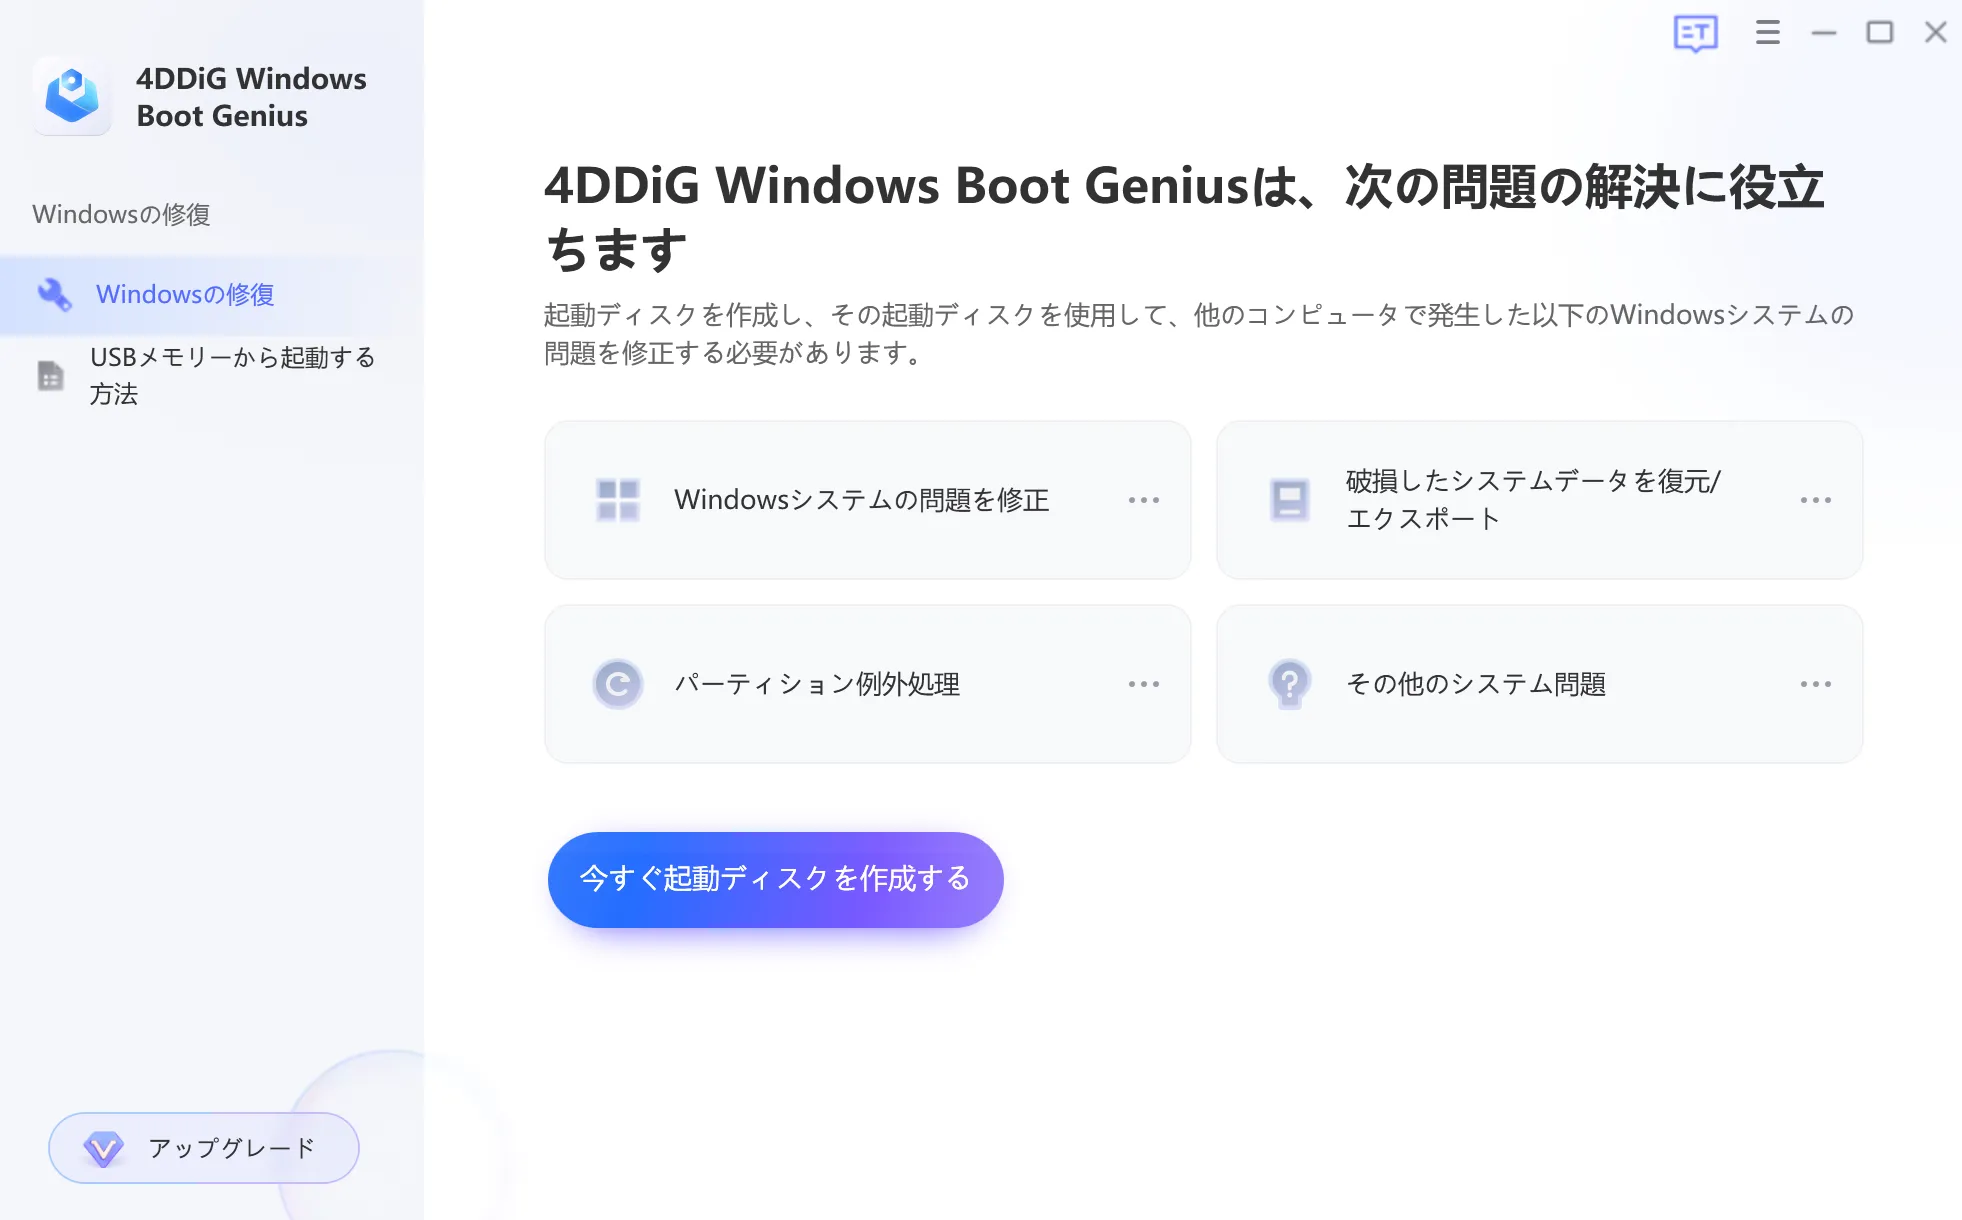 4DDiG Windows Boot Geniusを起動